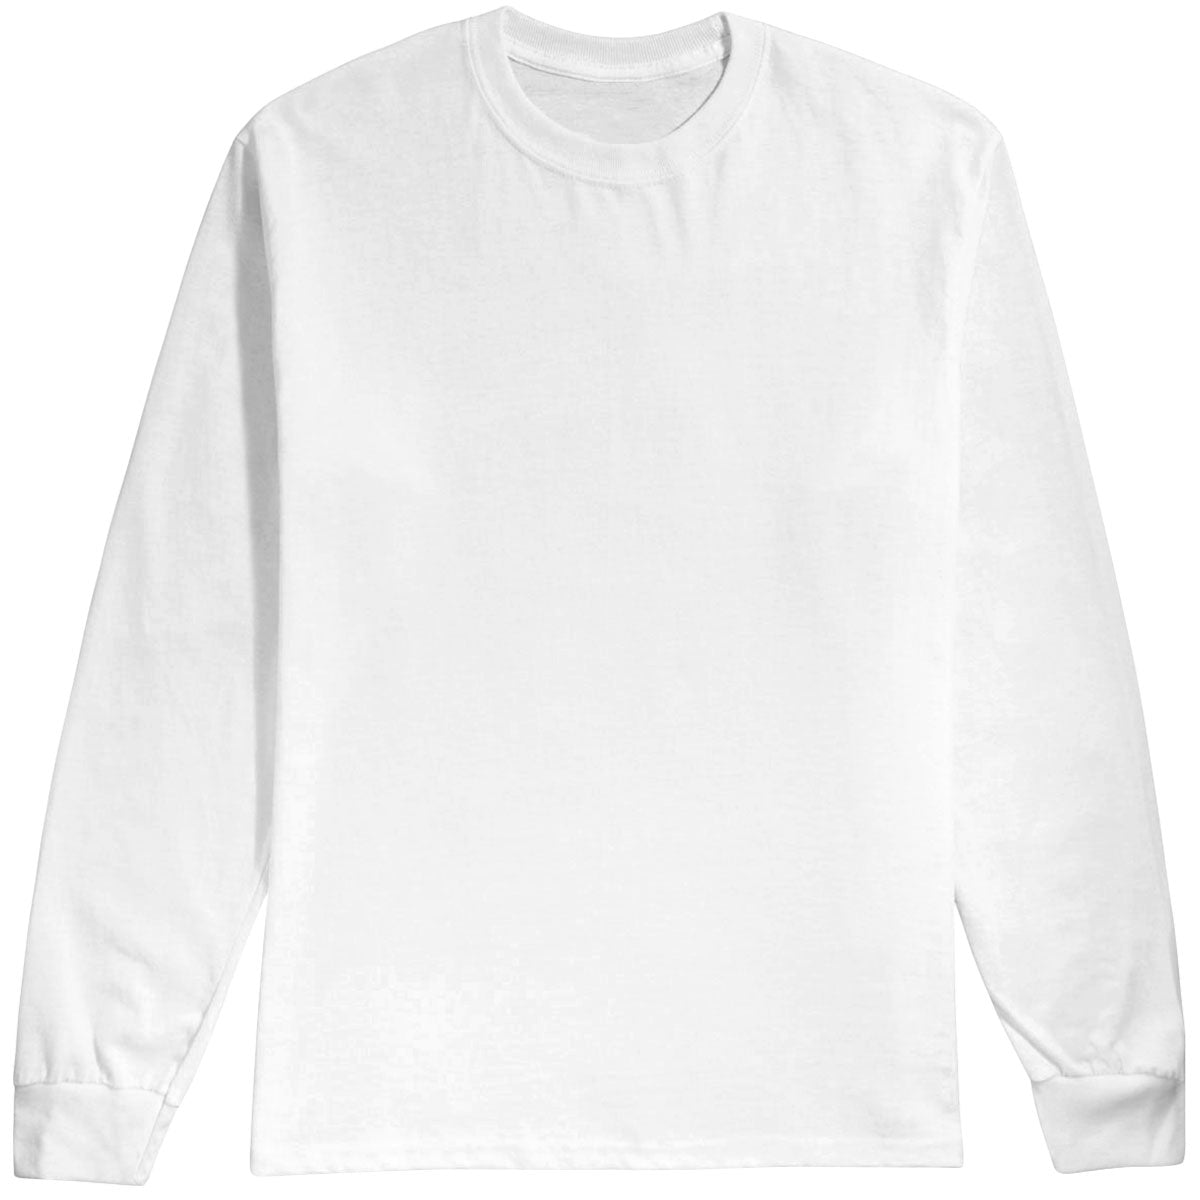 Converse F Reality Long Sleeve T-Shirt - White - XL image 1